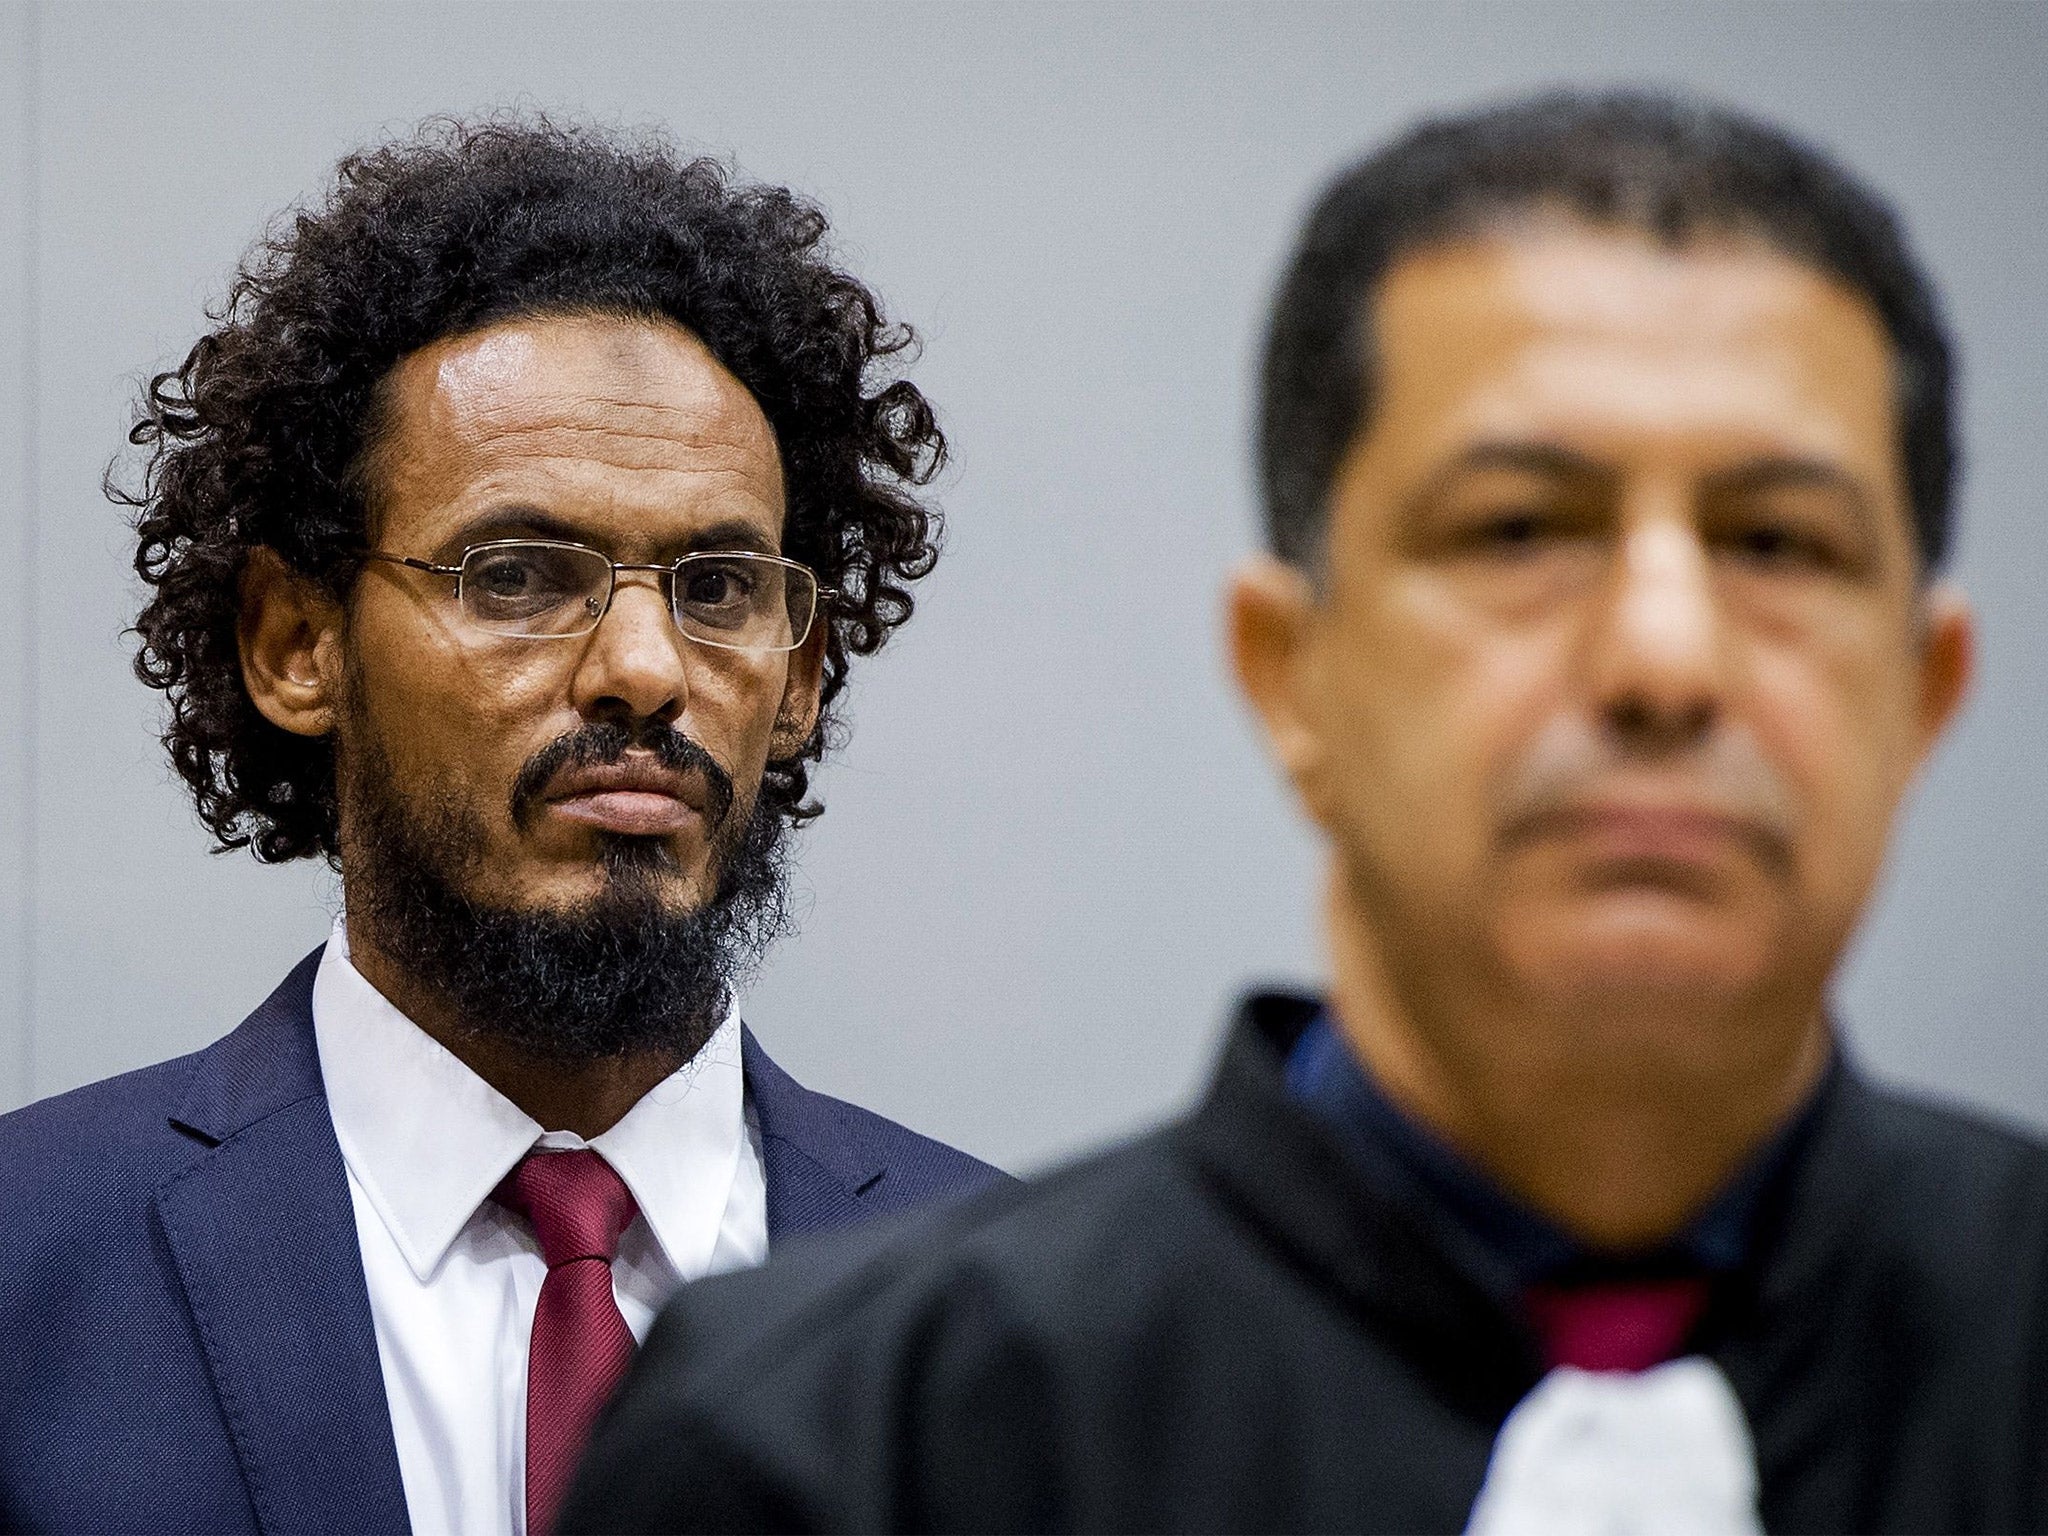 Ahmad al-Faqi al-Mahdi at a previous ICC hearing in The Hague. He is the first jihadist to appear before the tribunal